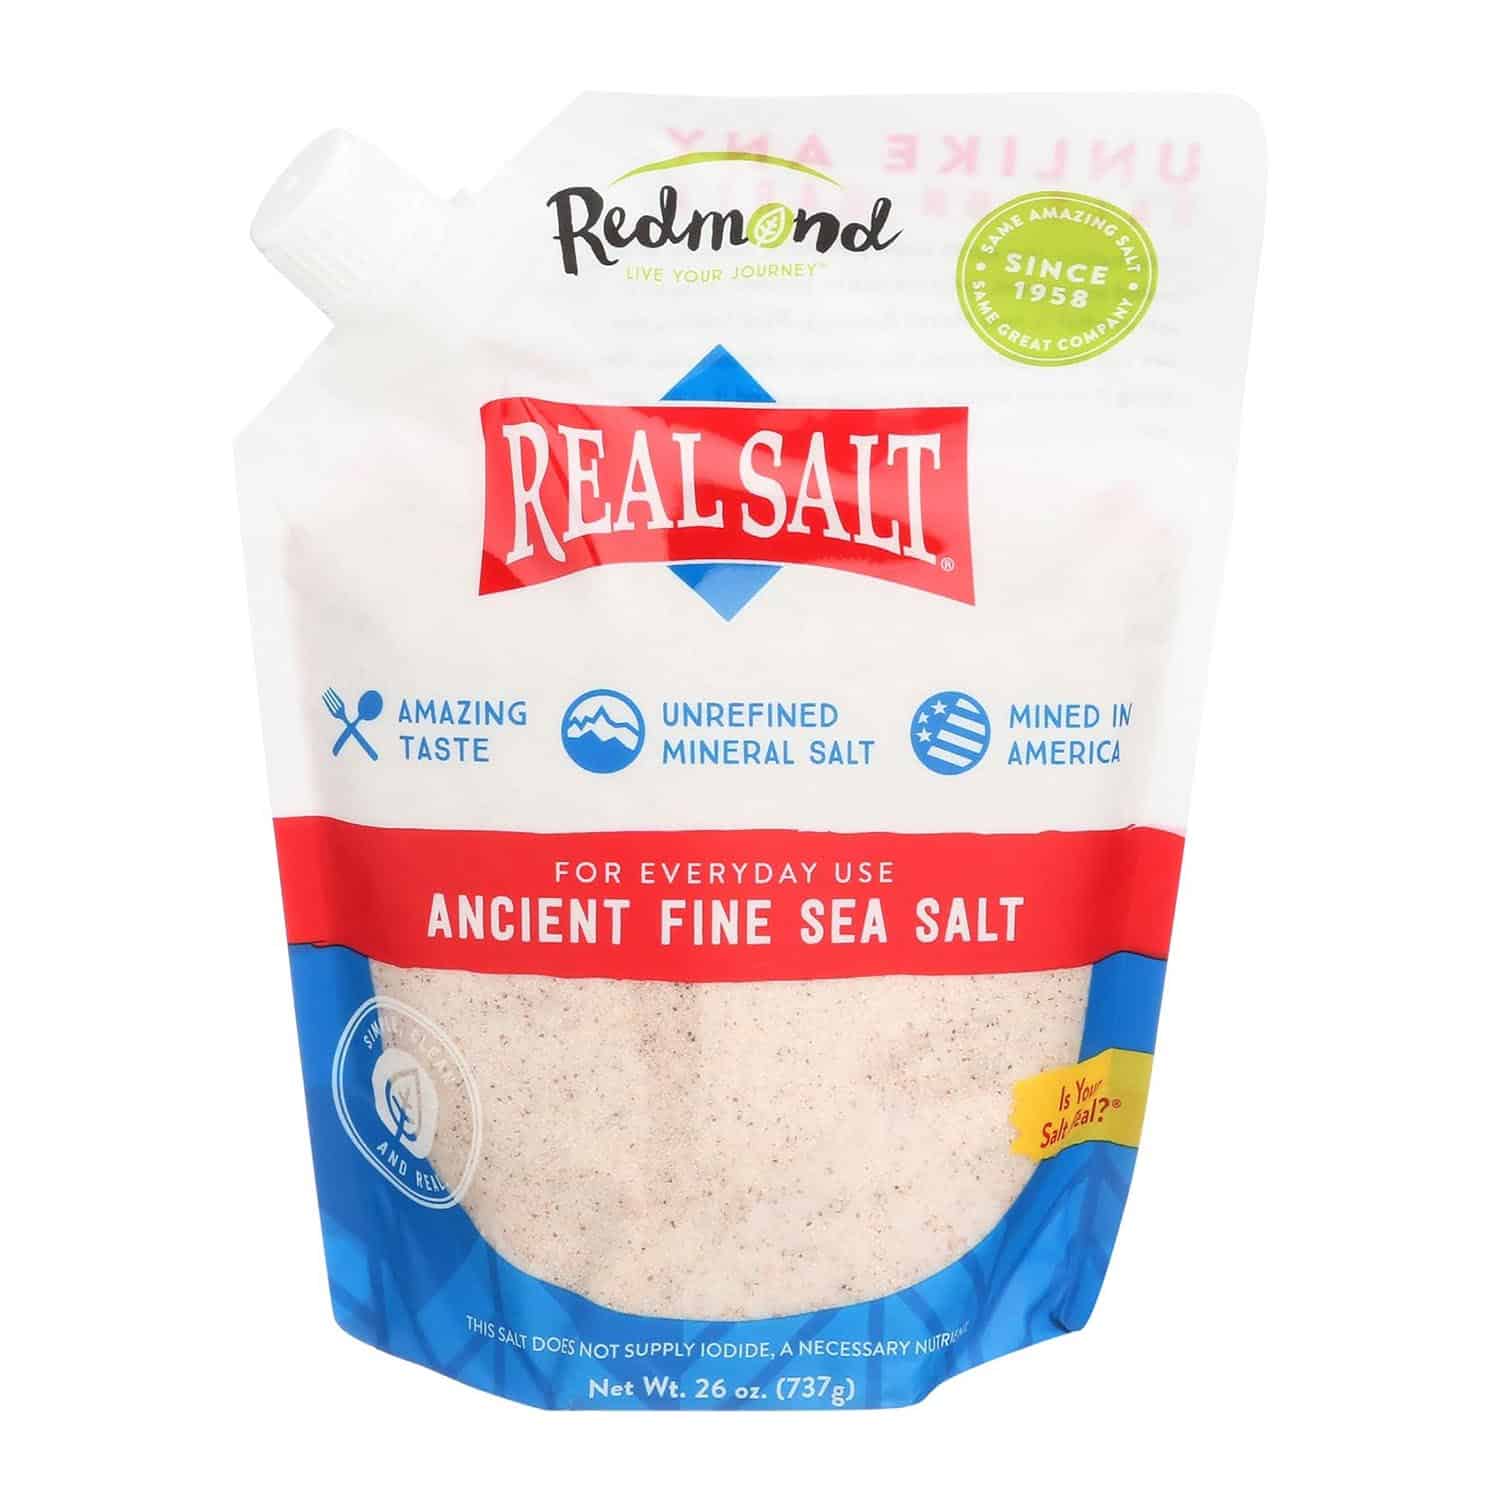 Redmond Real Salt - Ancient Fine Sea Salt, Unrefined Mineral Salt